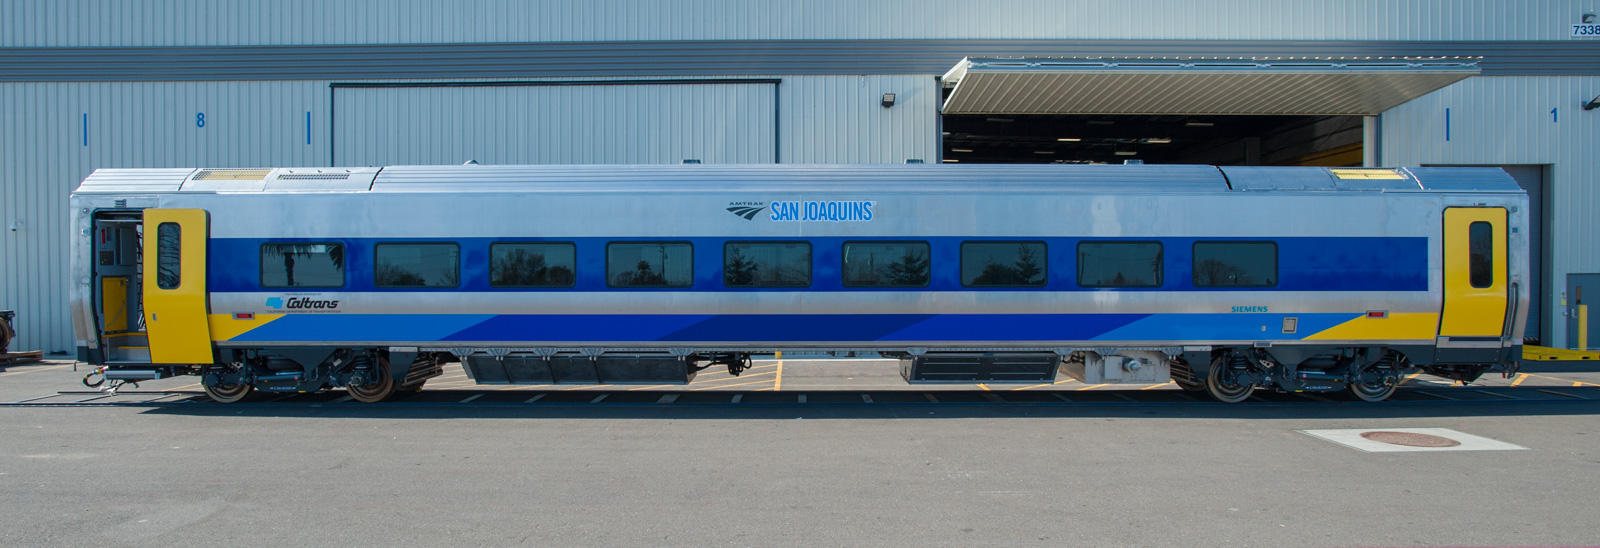 Siemens_Venture_Trainset_California.jpg